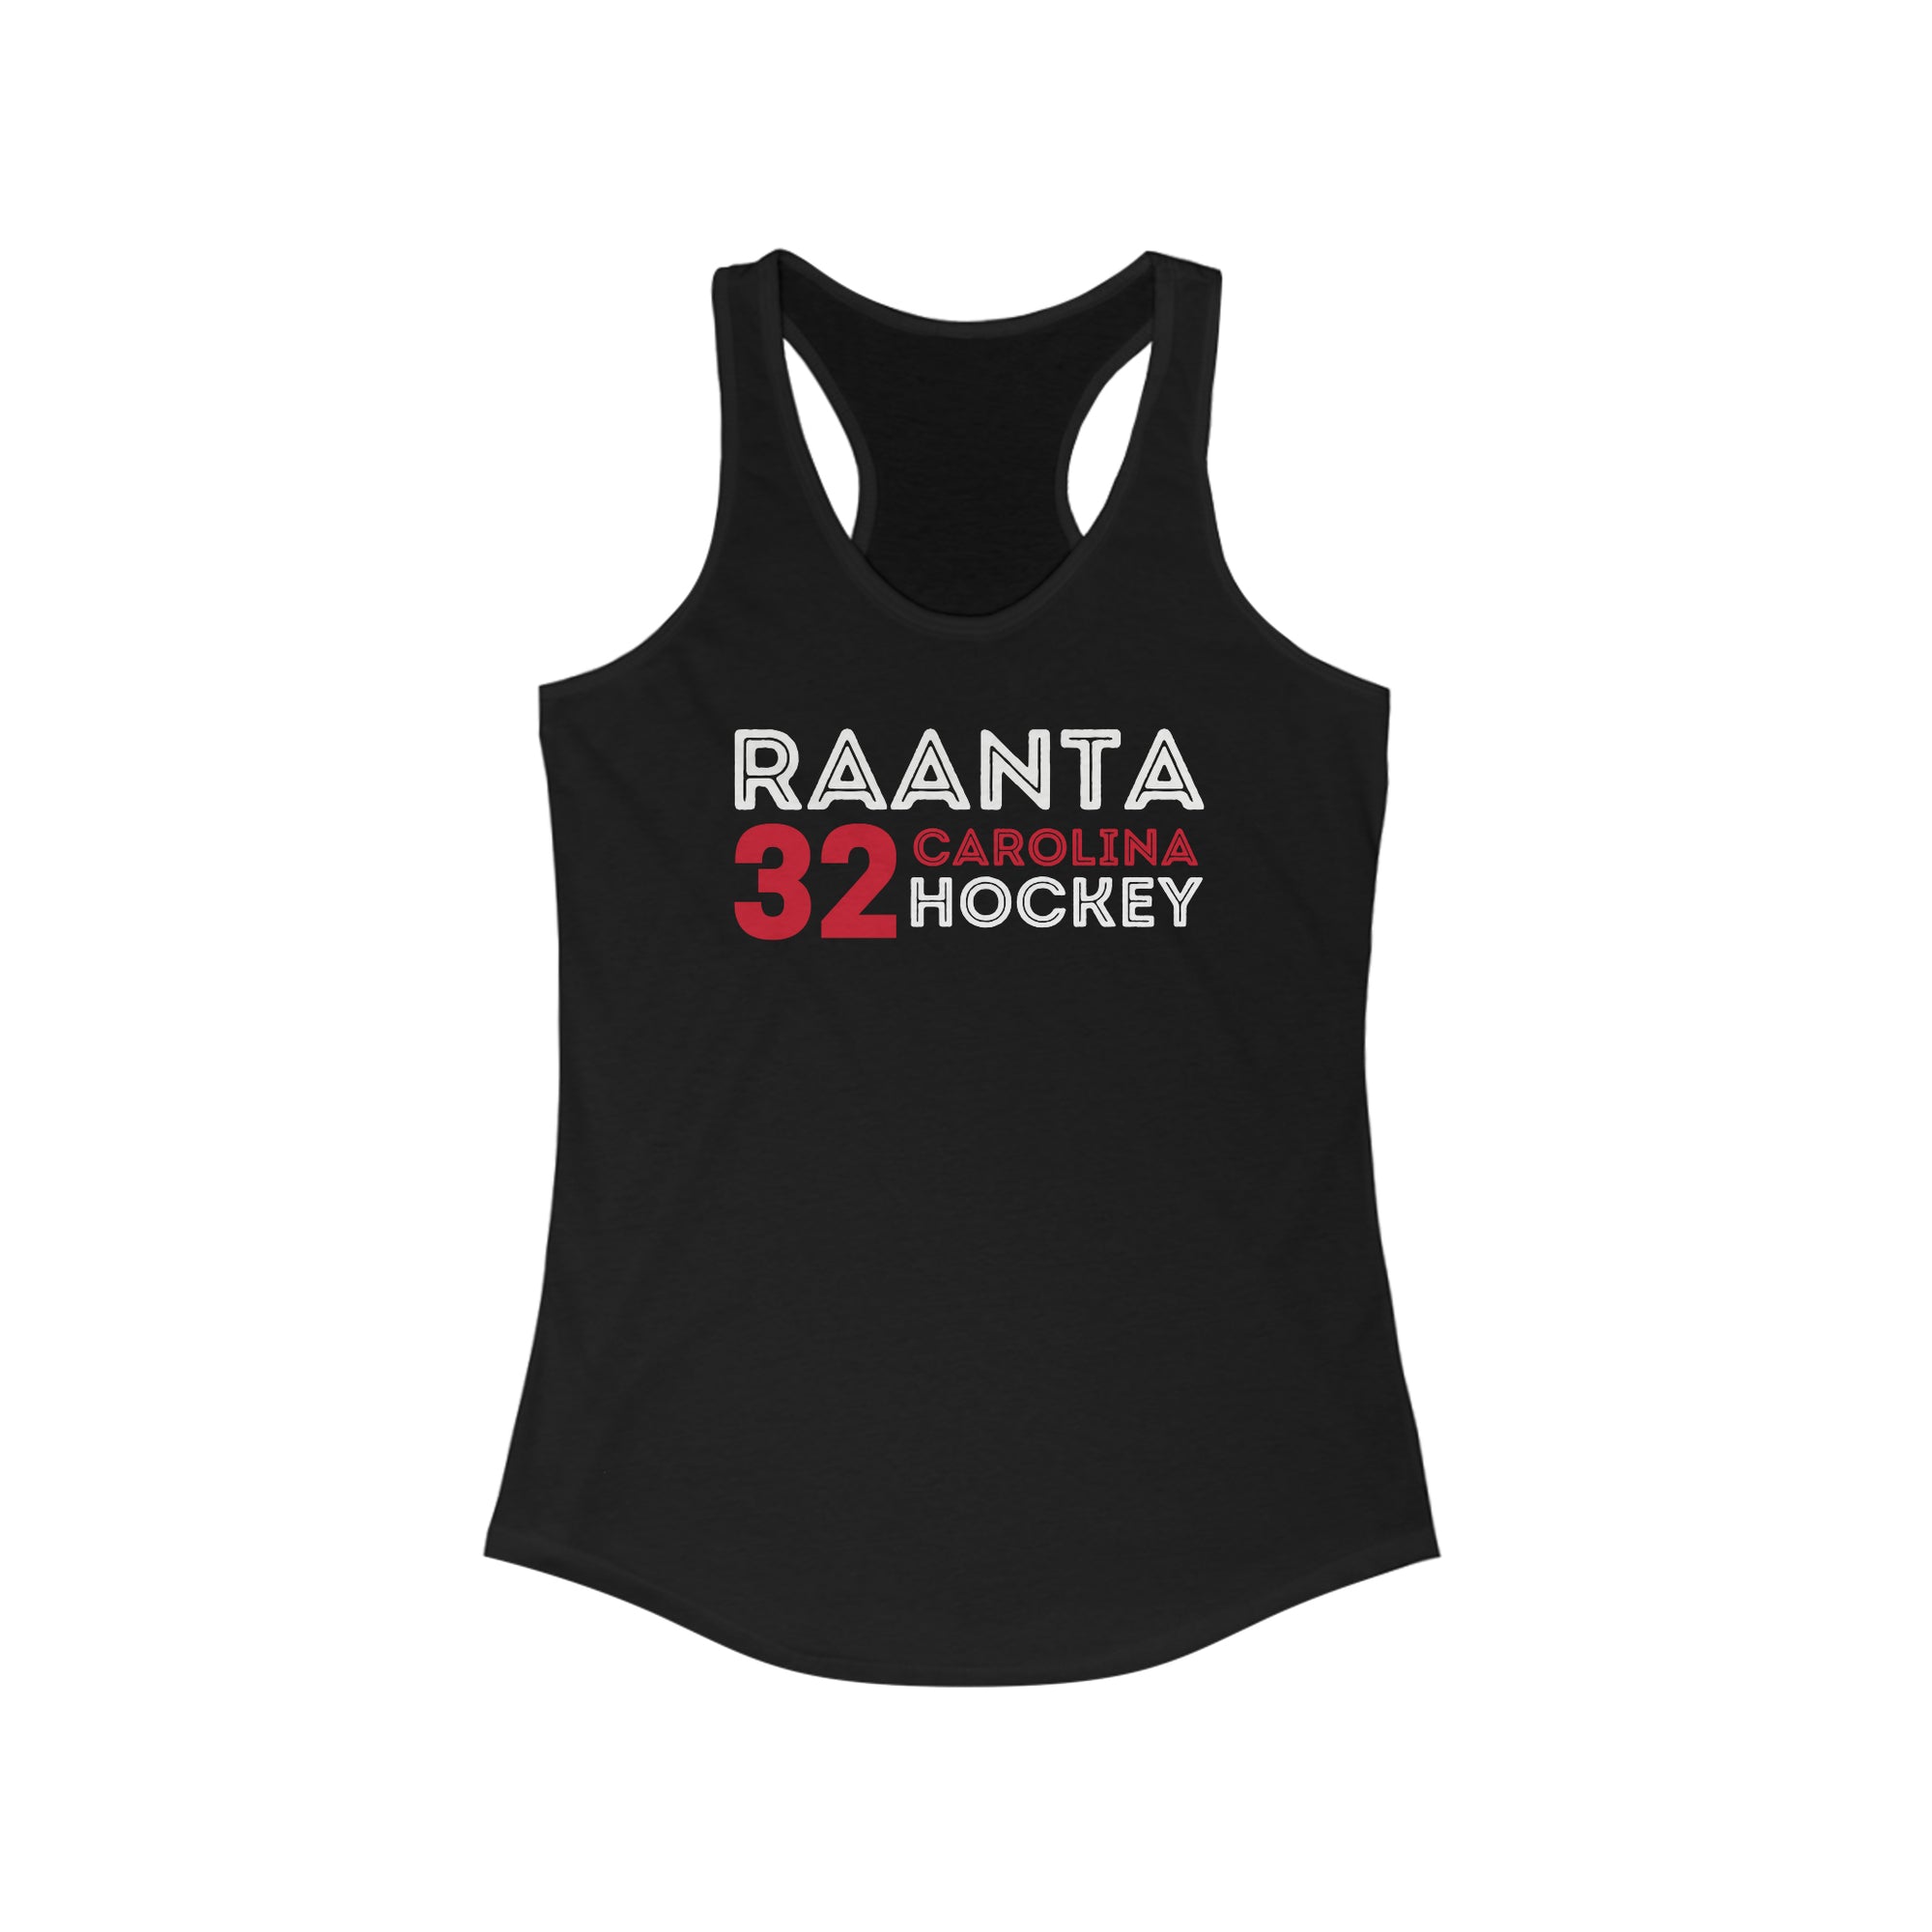 Raanta 32 Carolina Hockey Grafitti Wall Design Women's Ideal Racerback Tank Top